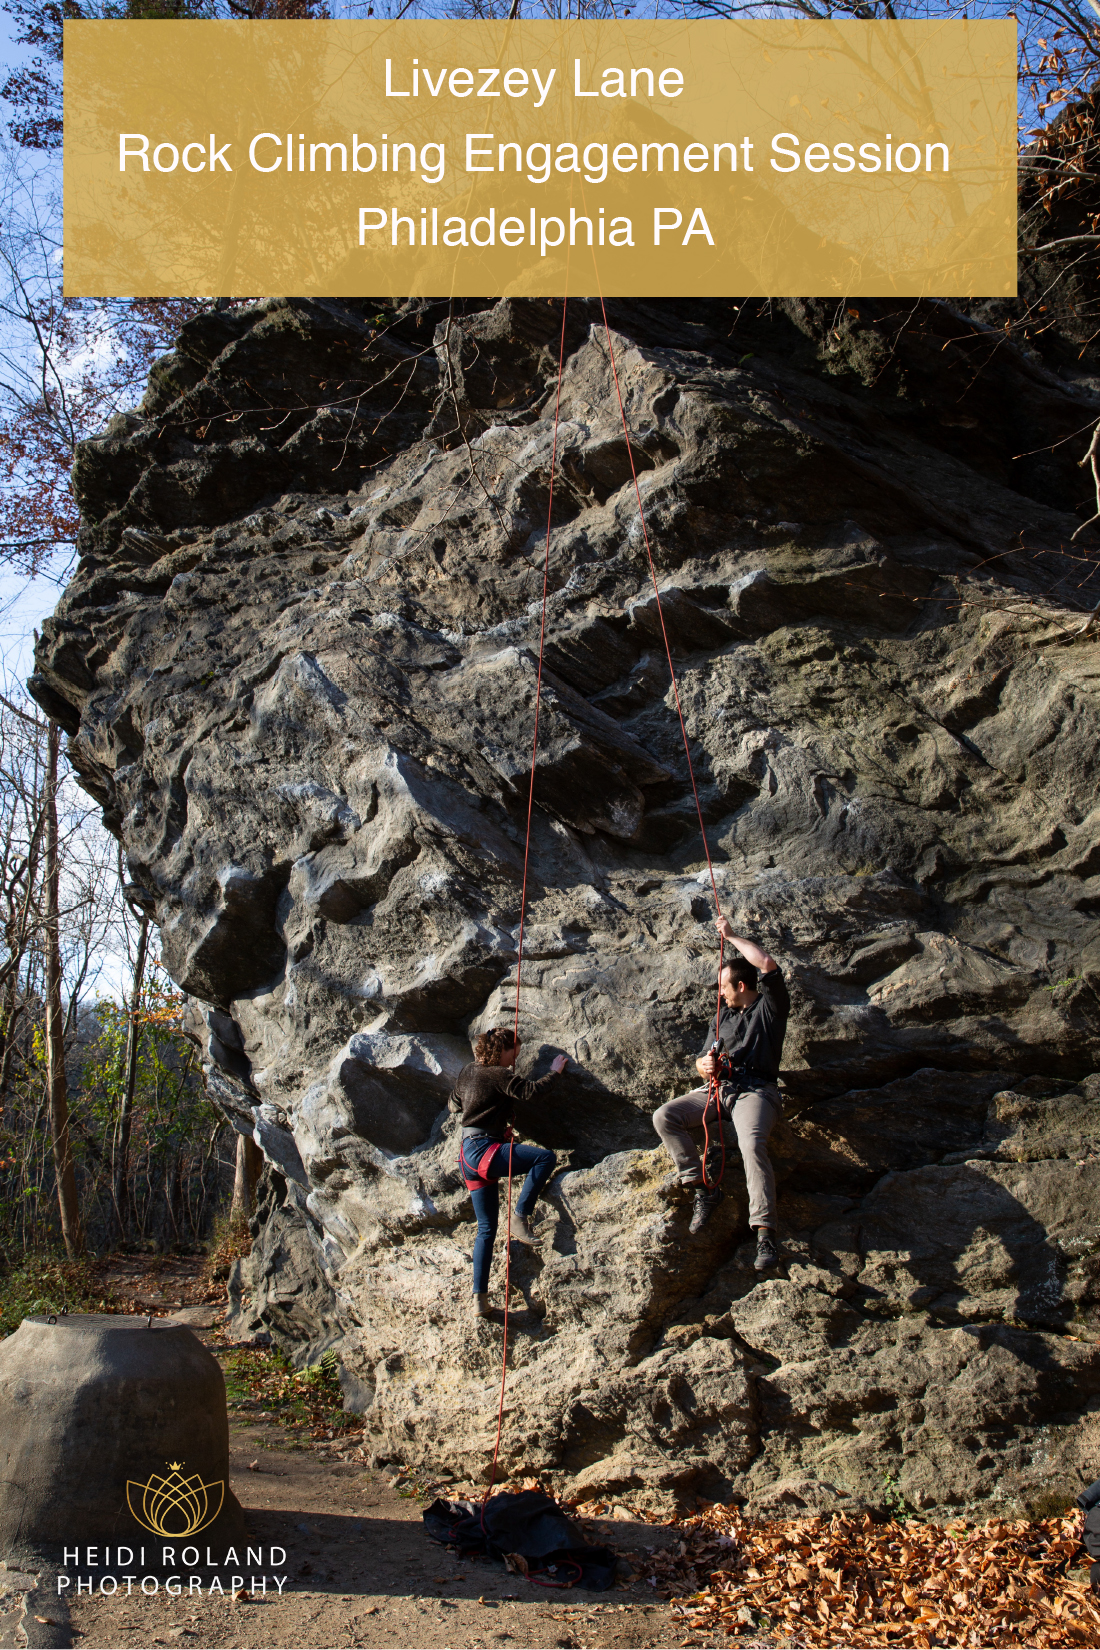 Livezey Lane Rock Climbing Engagement Session in Philadelphia by Heidi Roland Photography